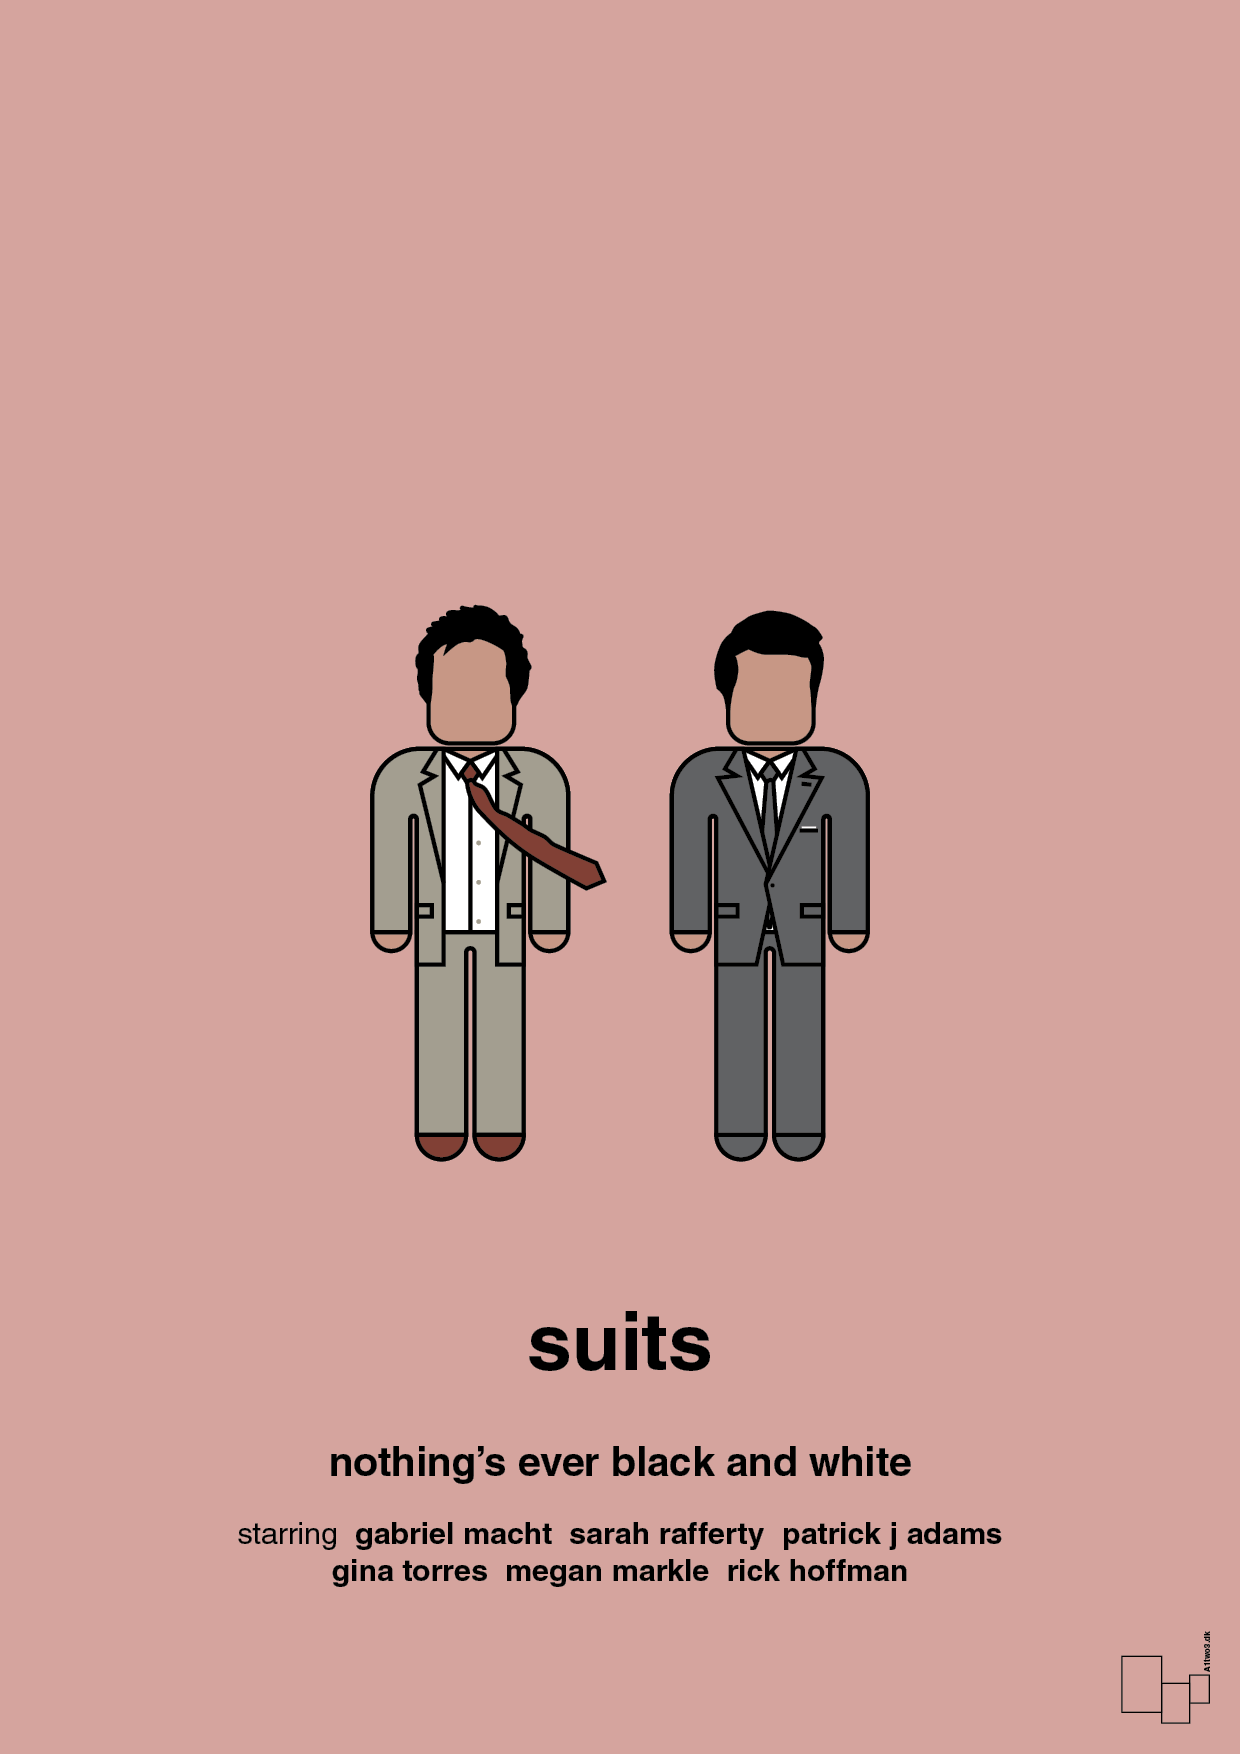 suits - Plakat med Film & TV i Bubble Shell